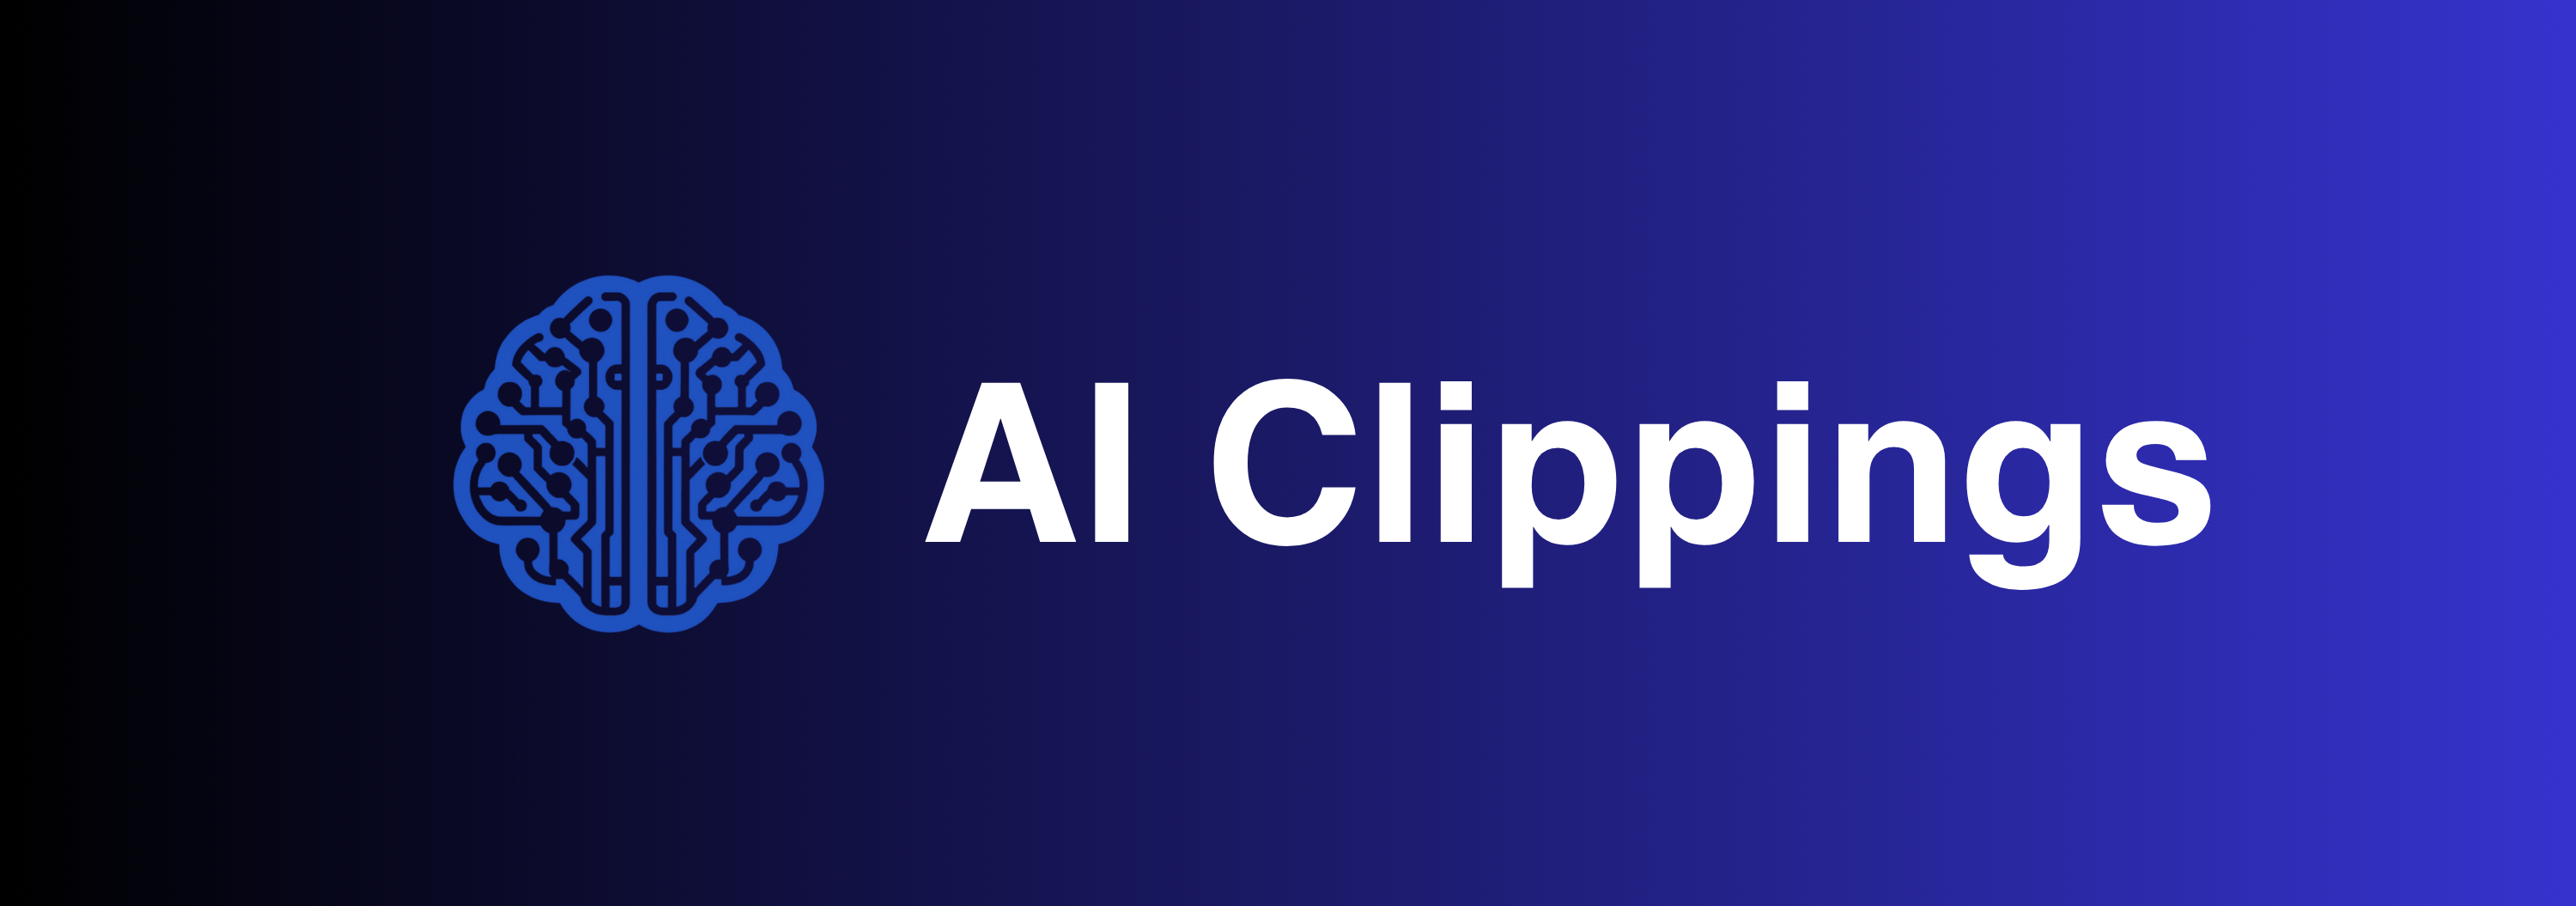 AI Clippings Logo 